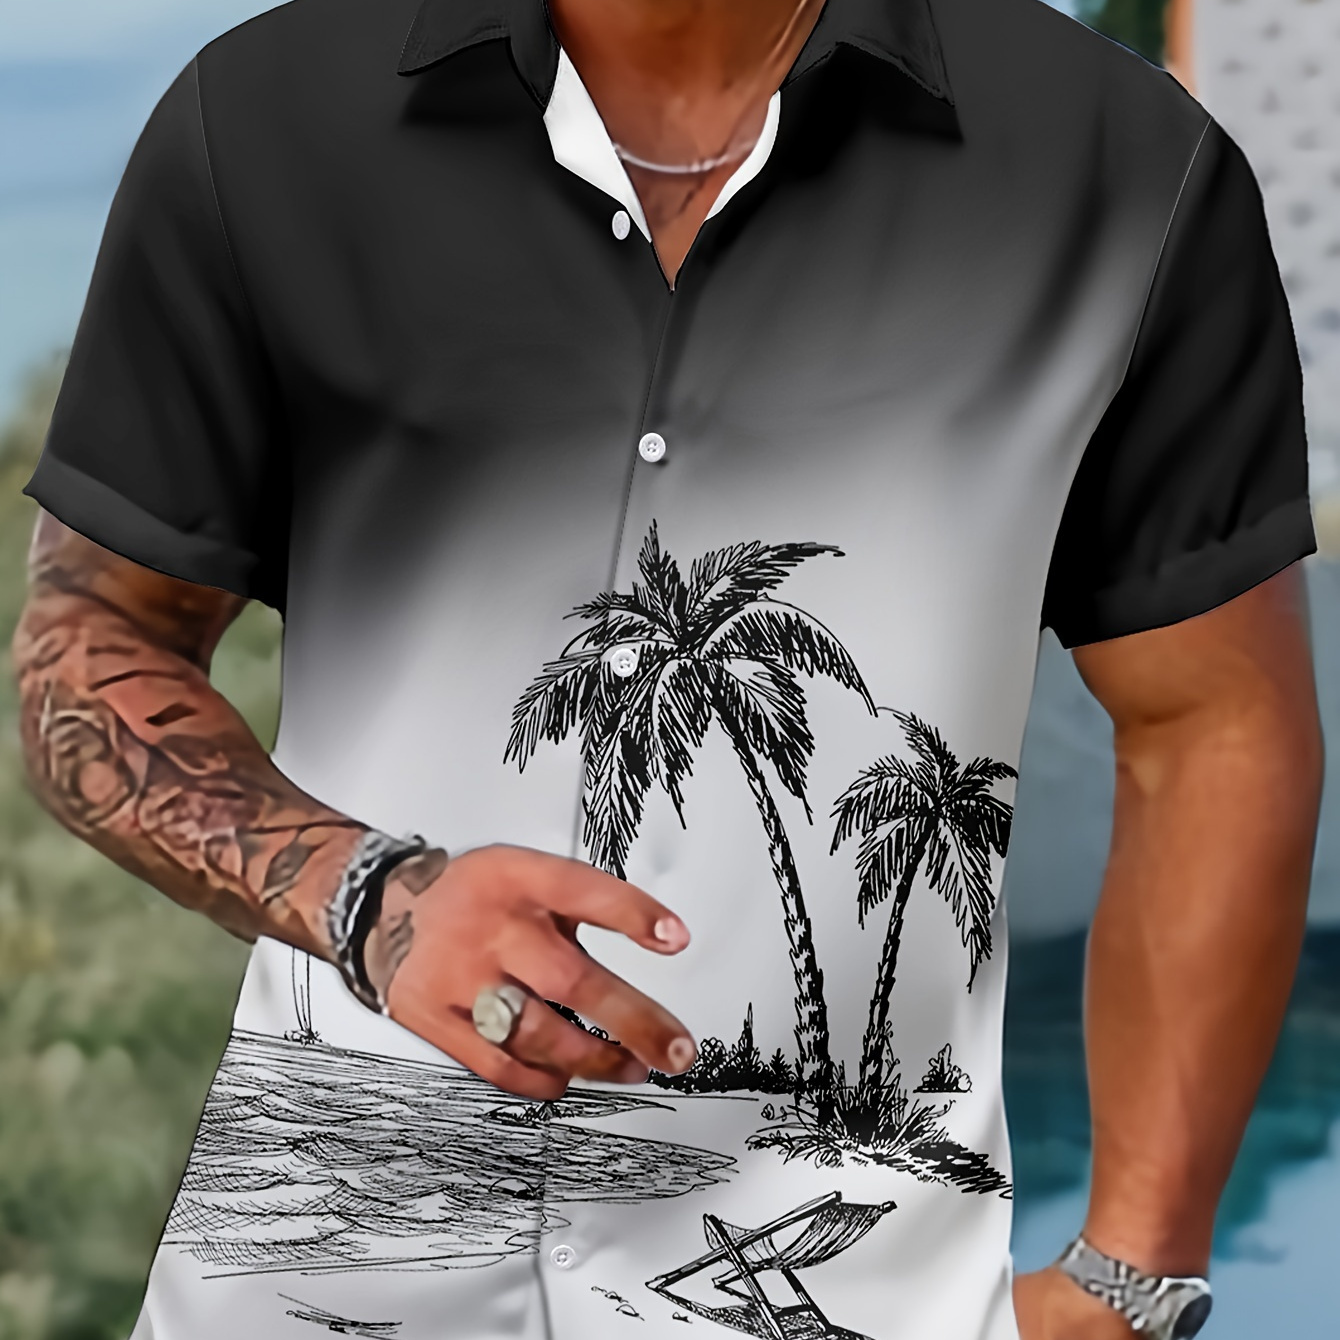 

Men's Trendy Hawaiian Lapel Collar Graphic Shirt With Stylish Palm Tree Print For Summer Beach, Pool And Resort